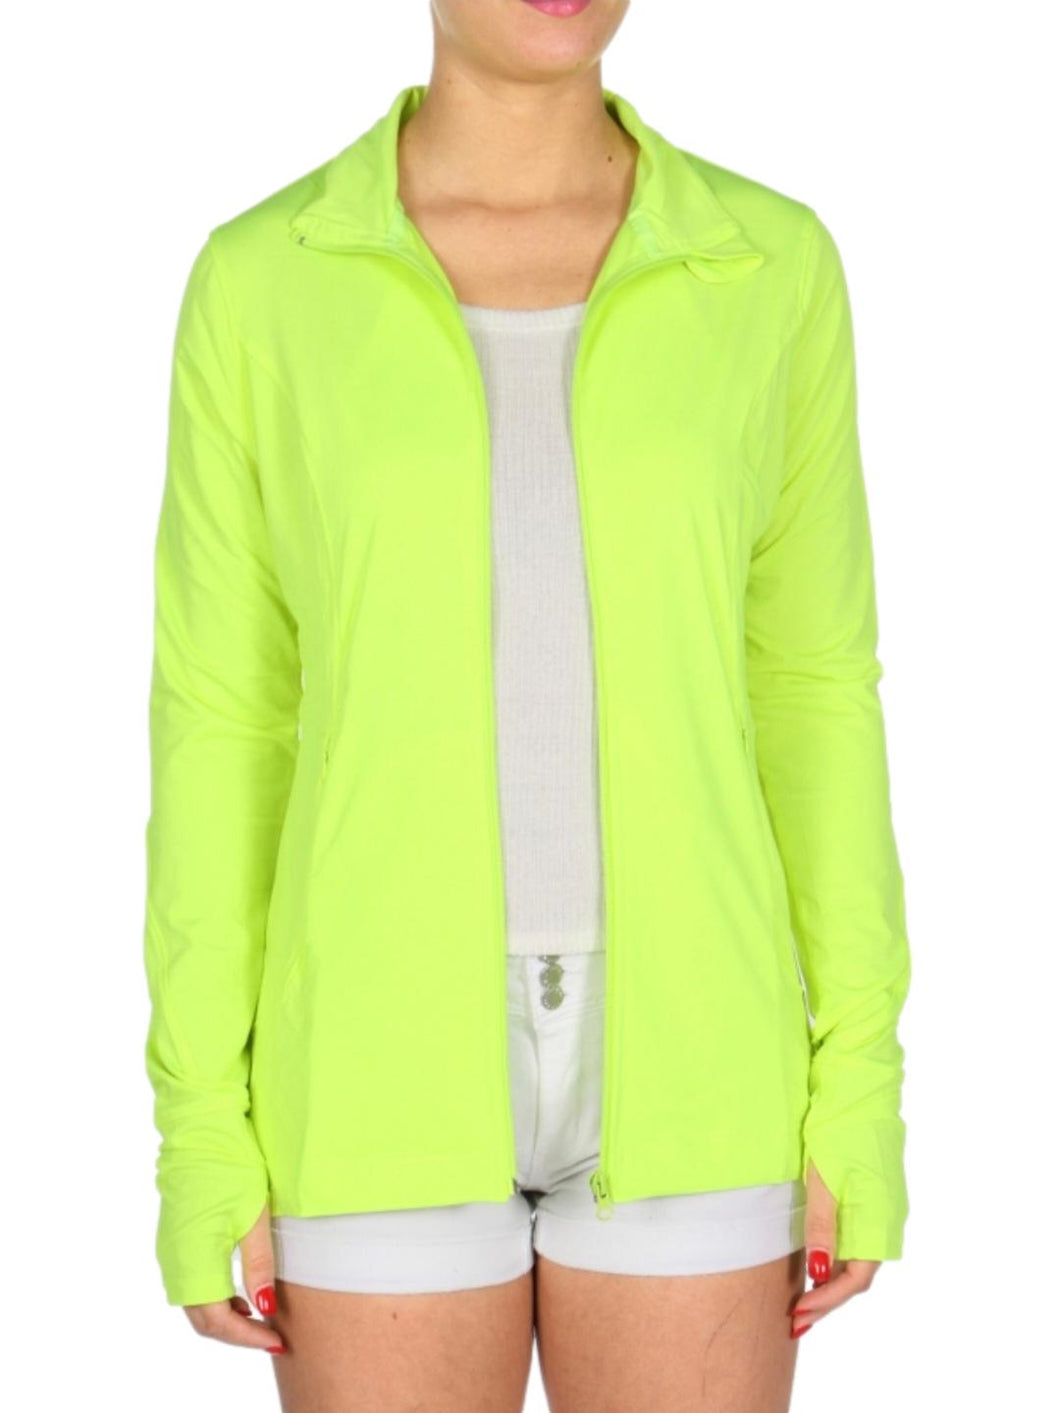 Women's Neon Highlighter Yellow Crossdfit Jacket